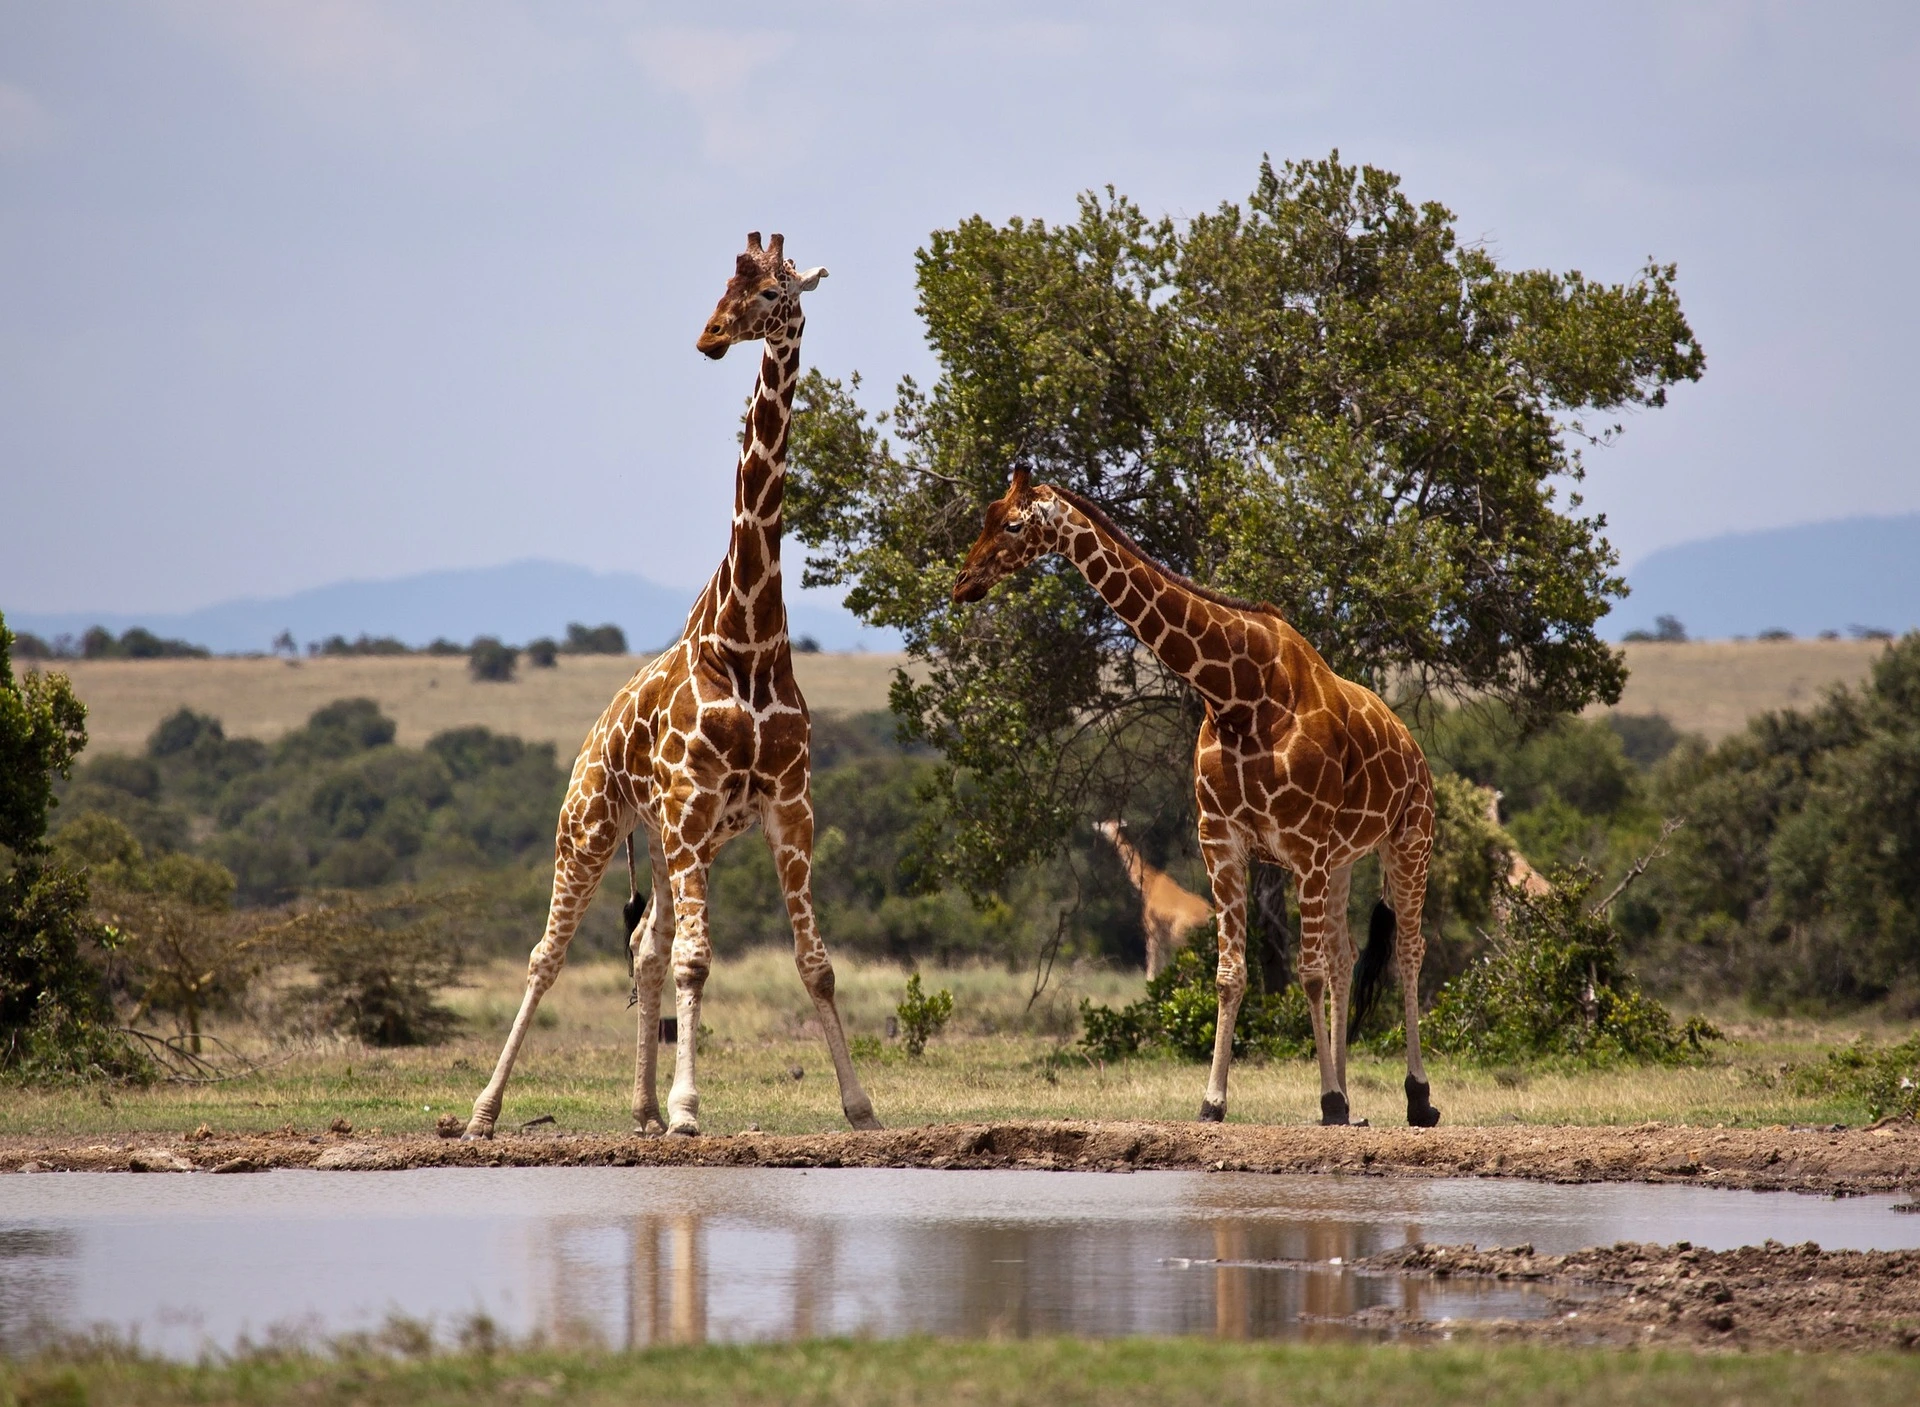 Holidays to Africa - Giraffes in Masai Mara National park.